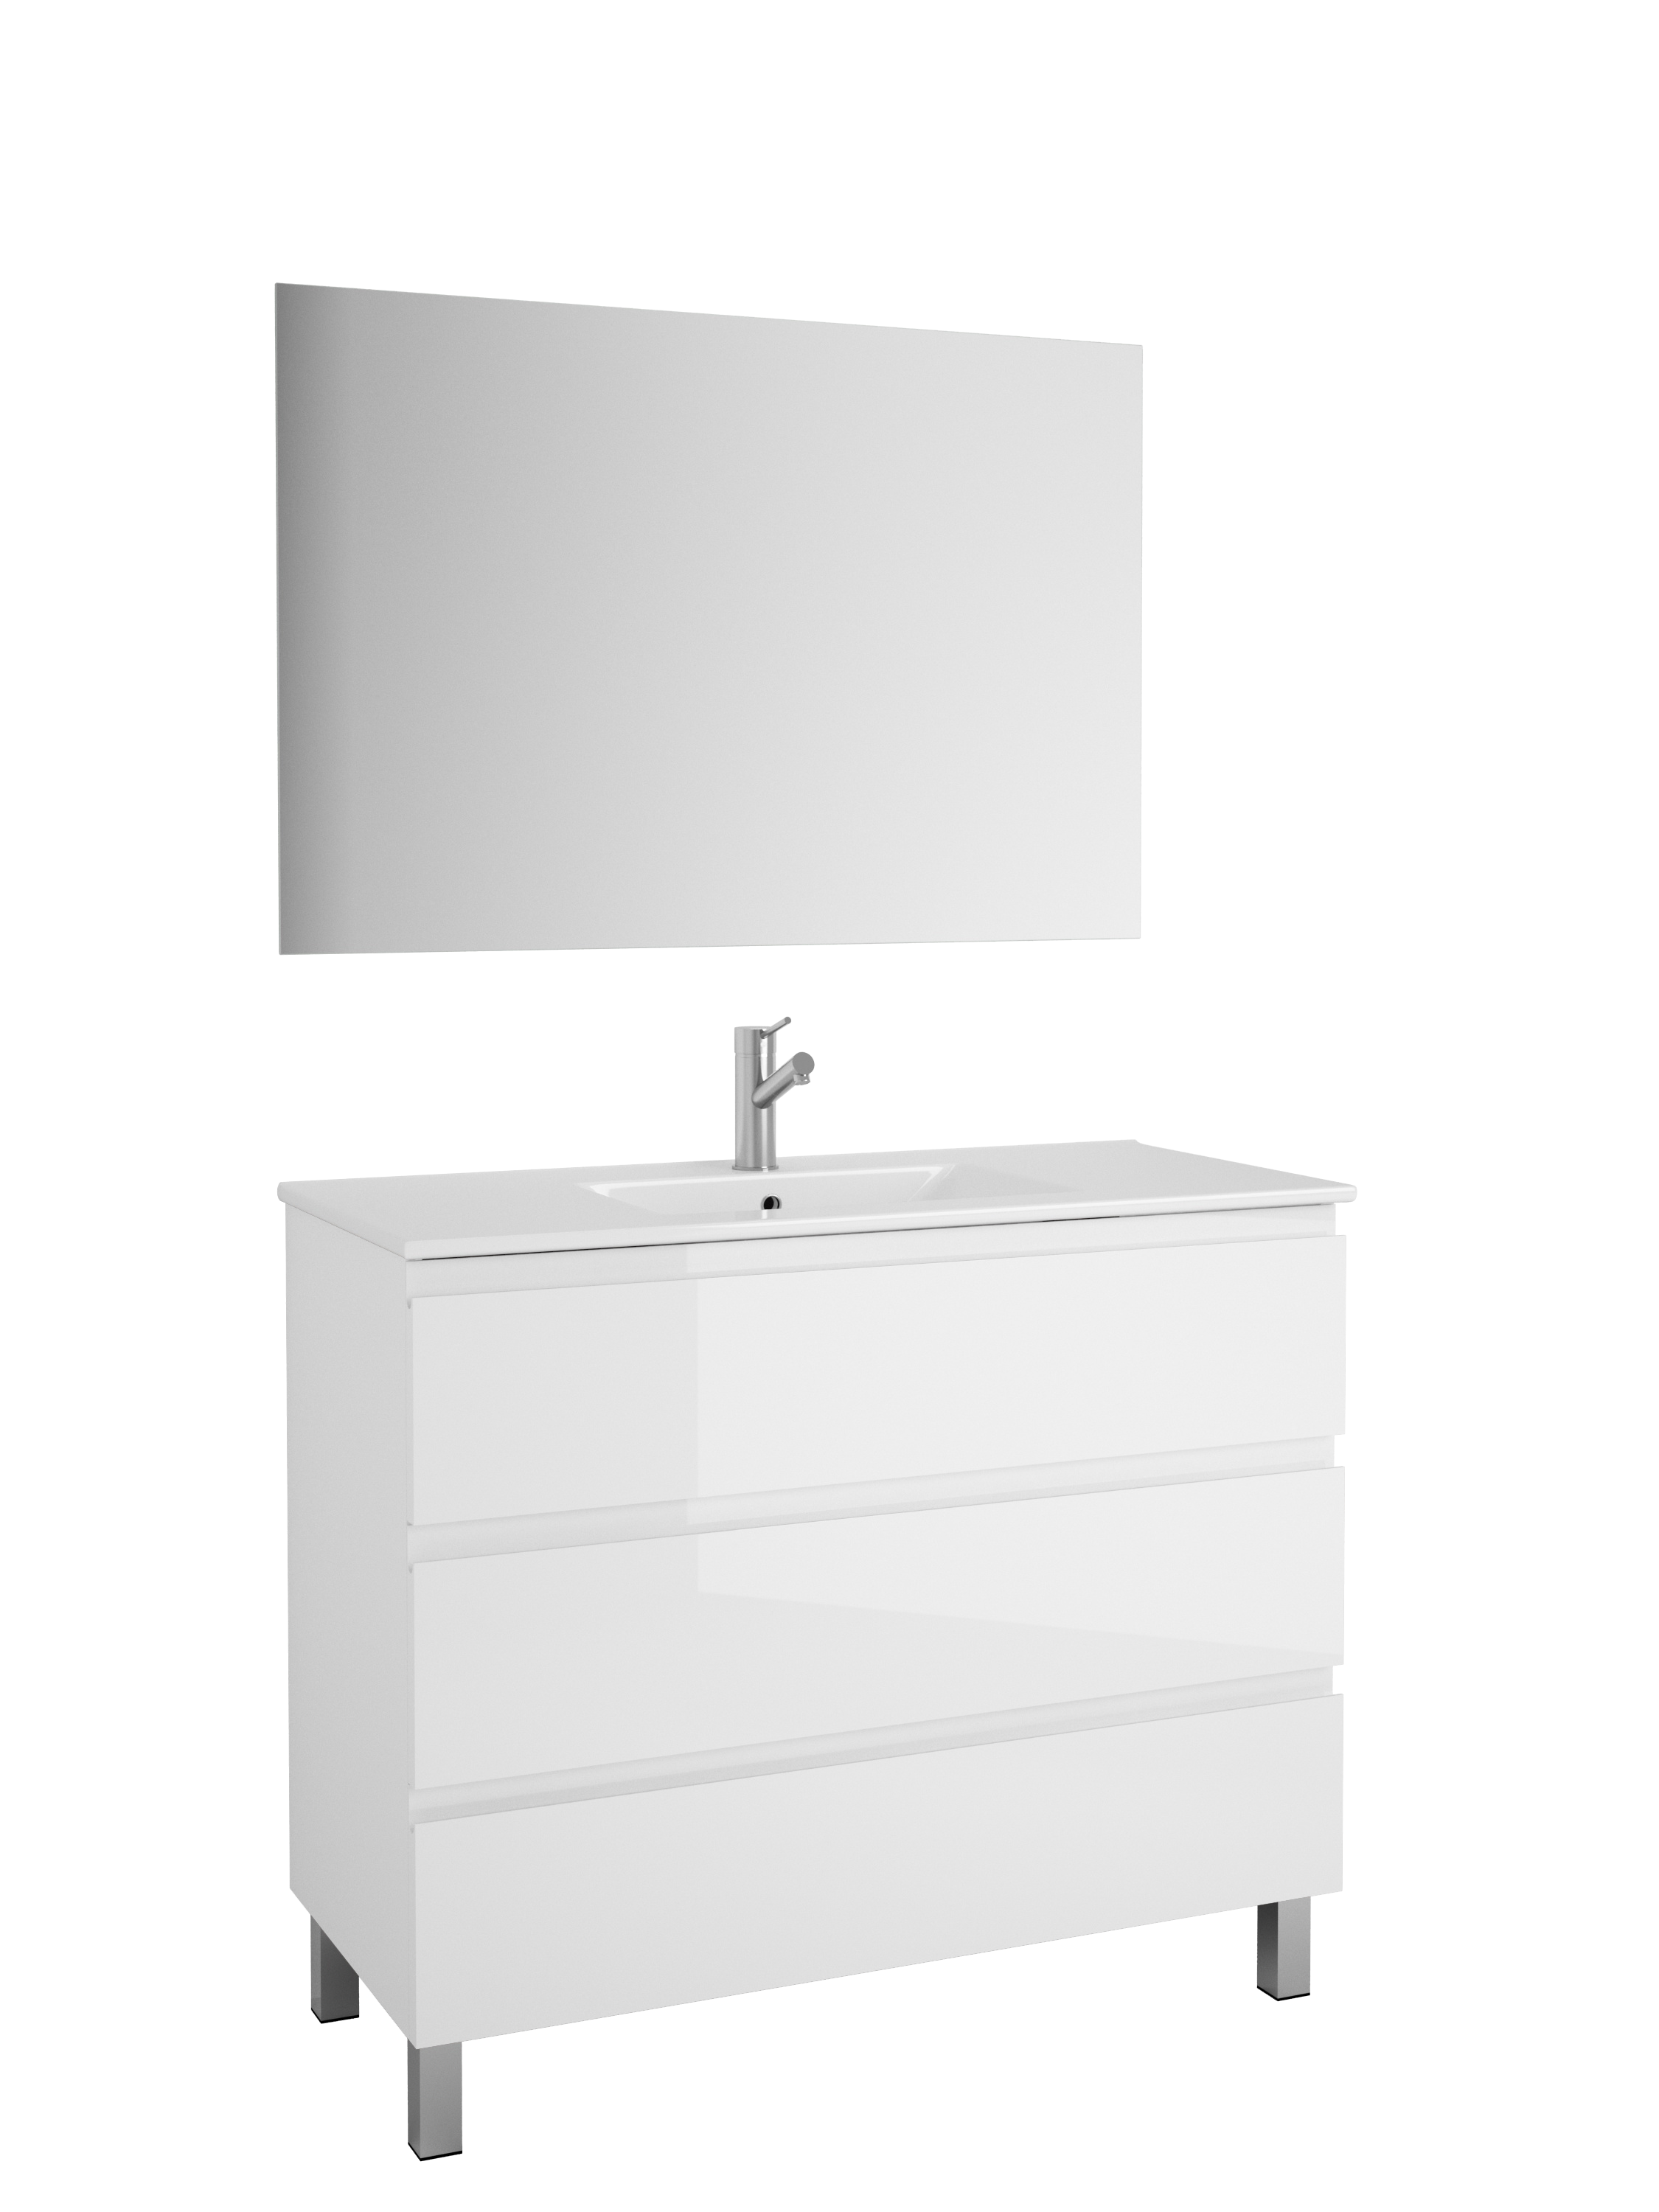 DAX Costa Vanity Cabinet with Onix basin